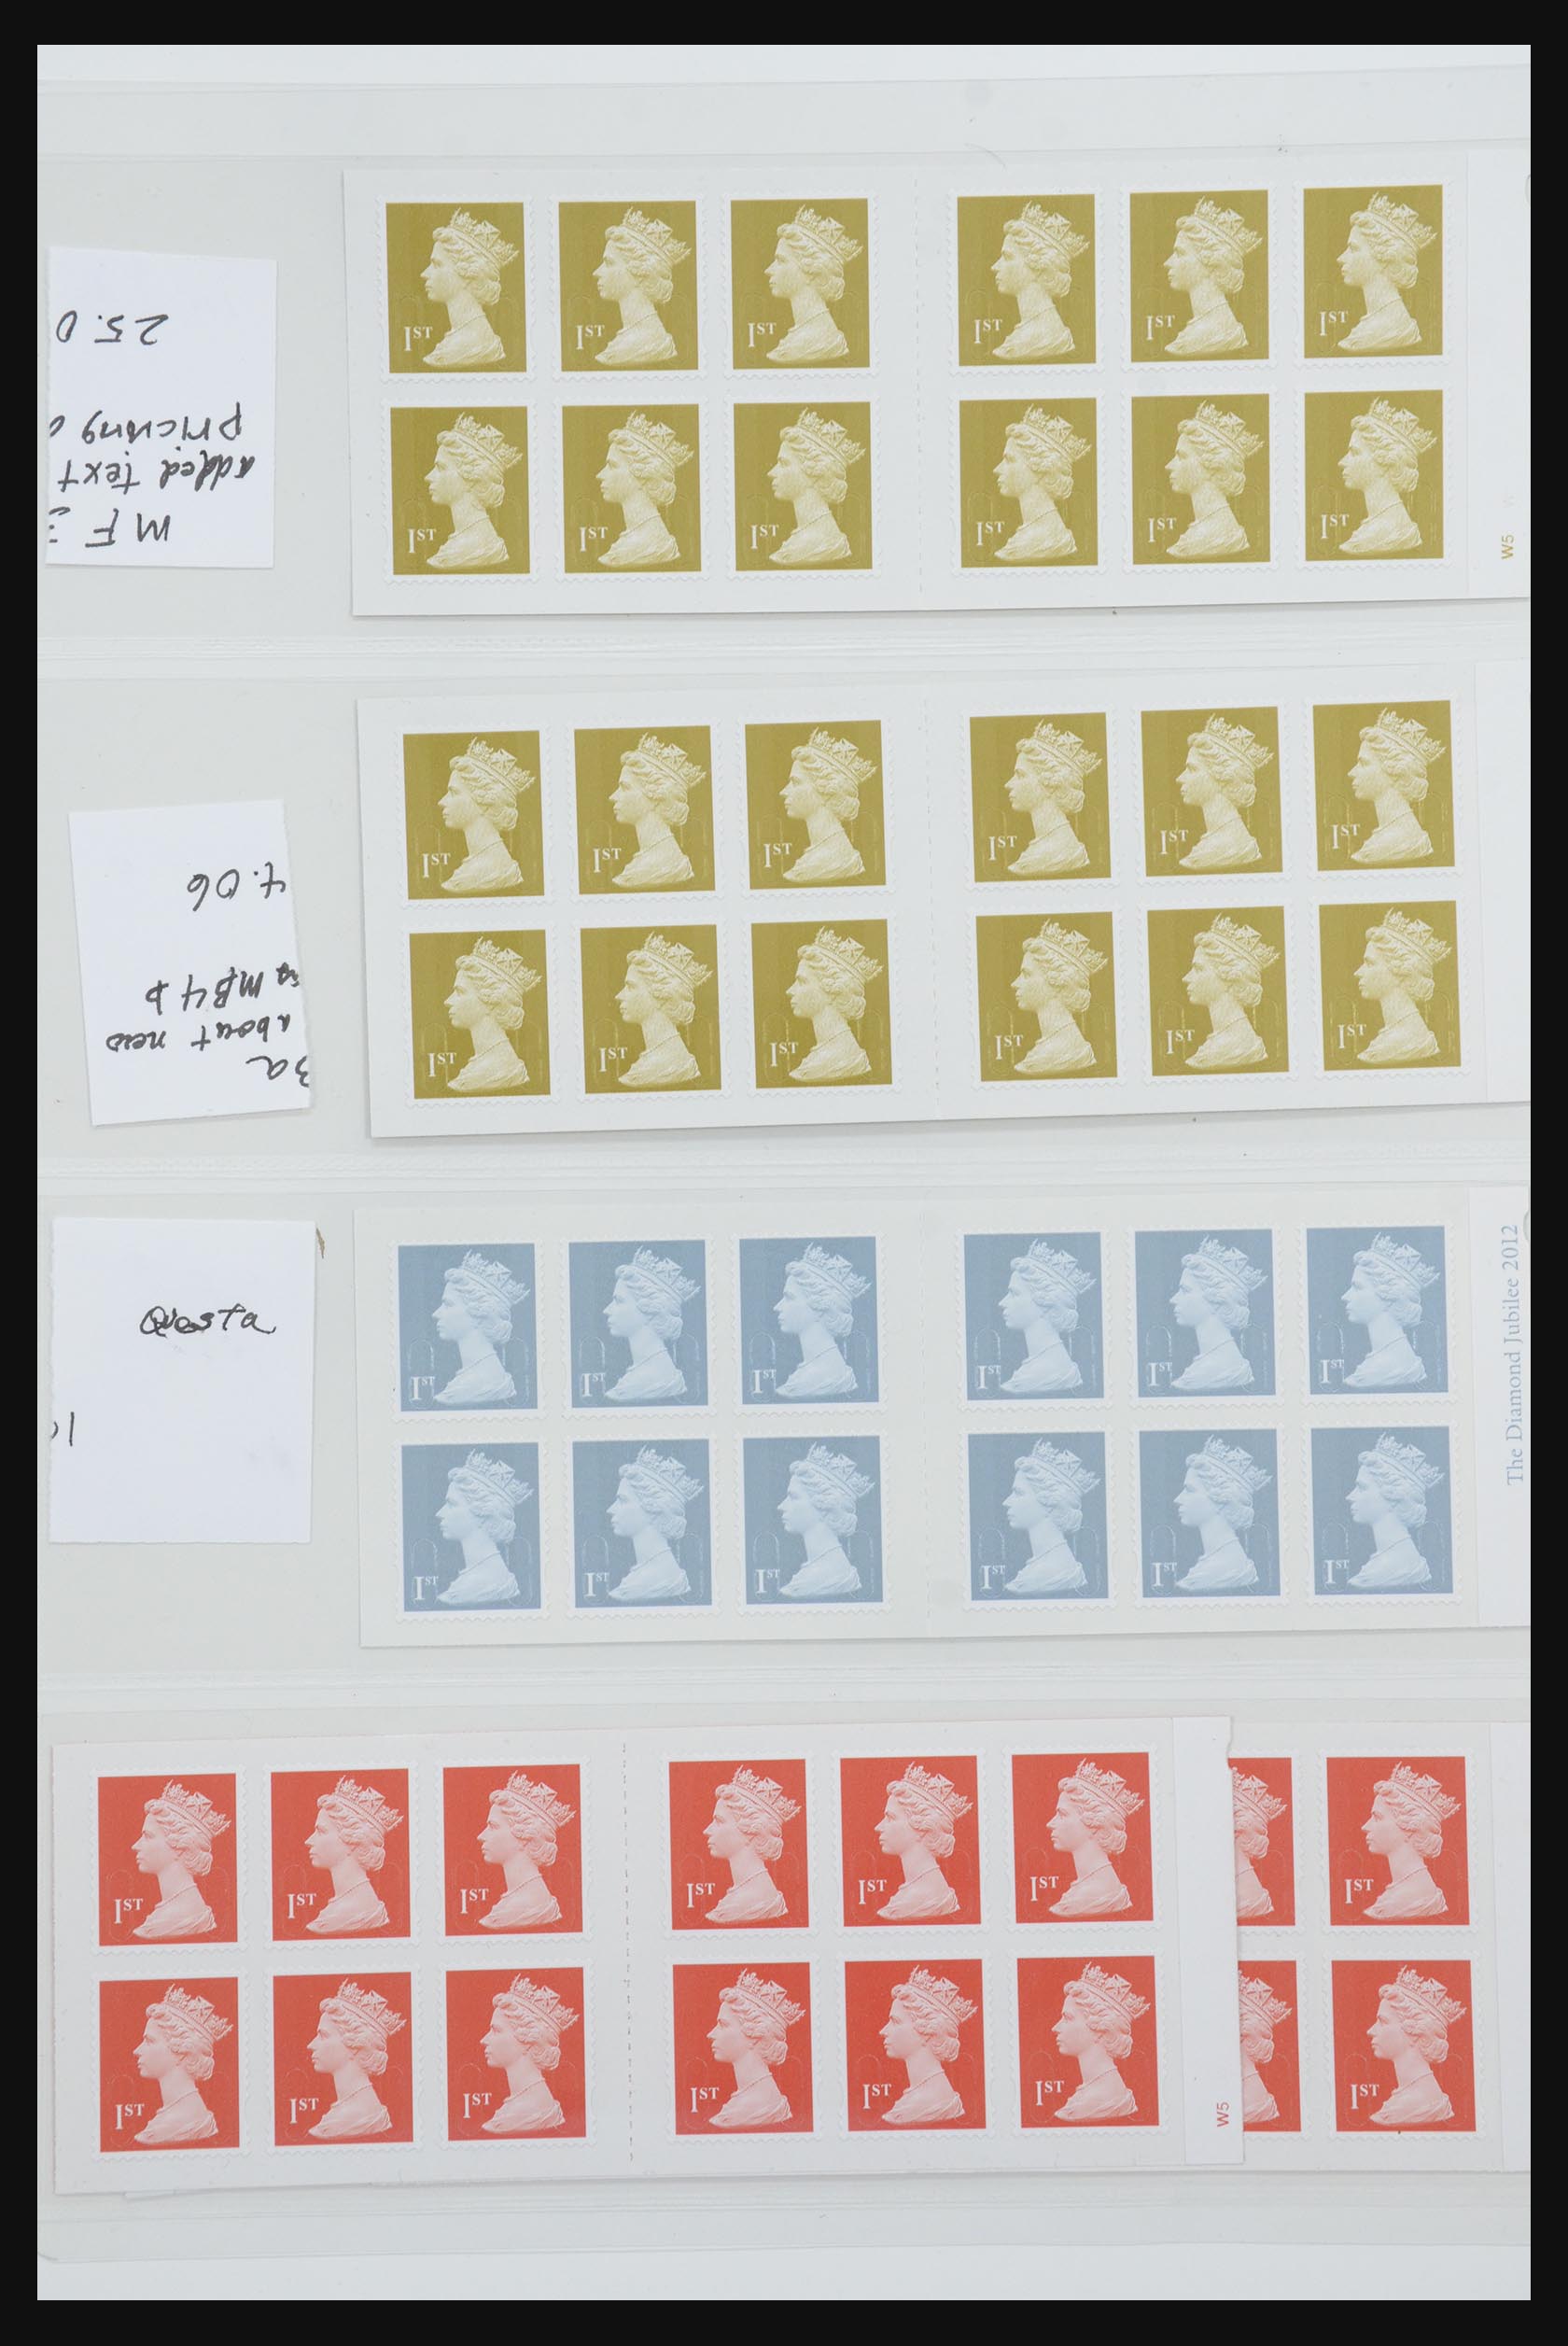 31959 352 - 31959 Great Britain stampbooklets 1987-2016!!